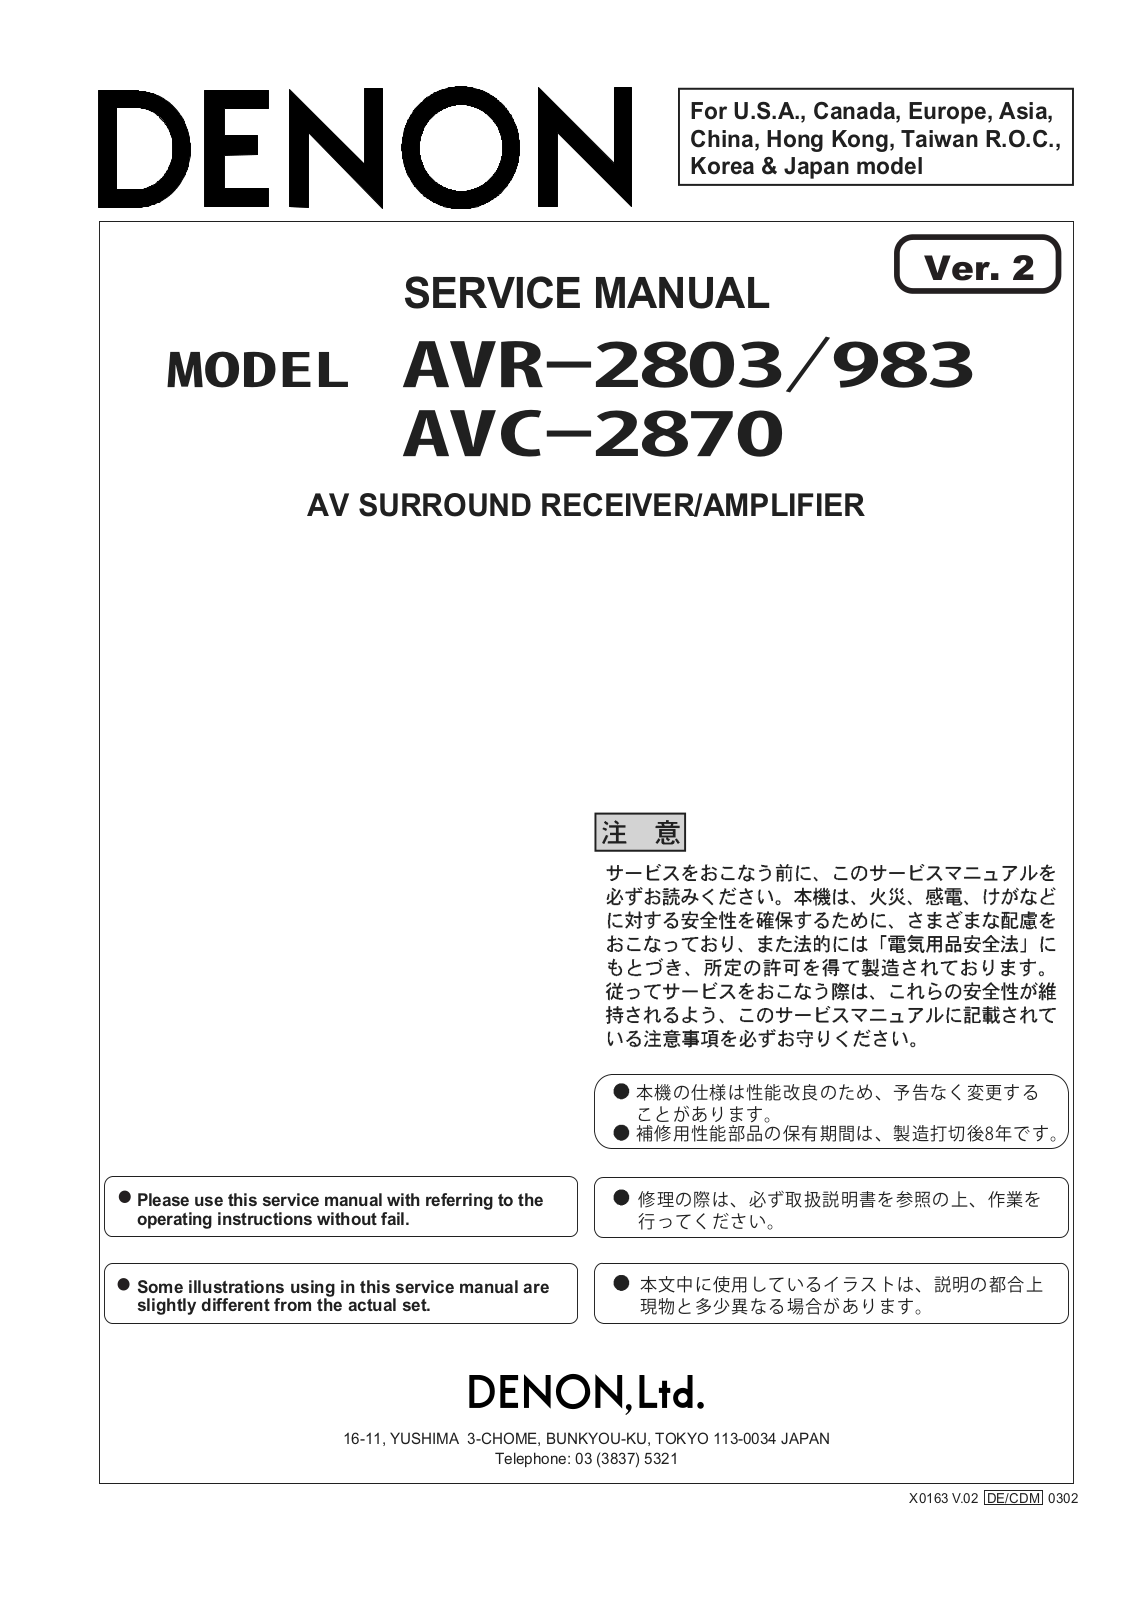 Denon AVC2870JP Service Manual